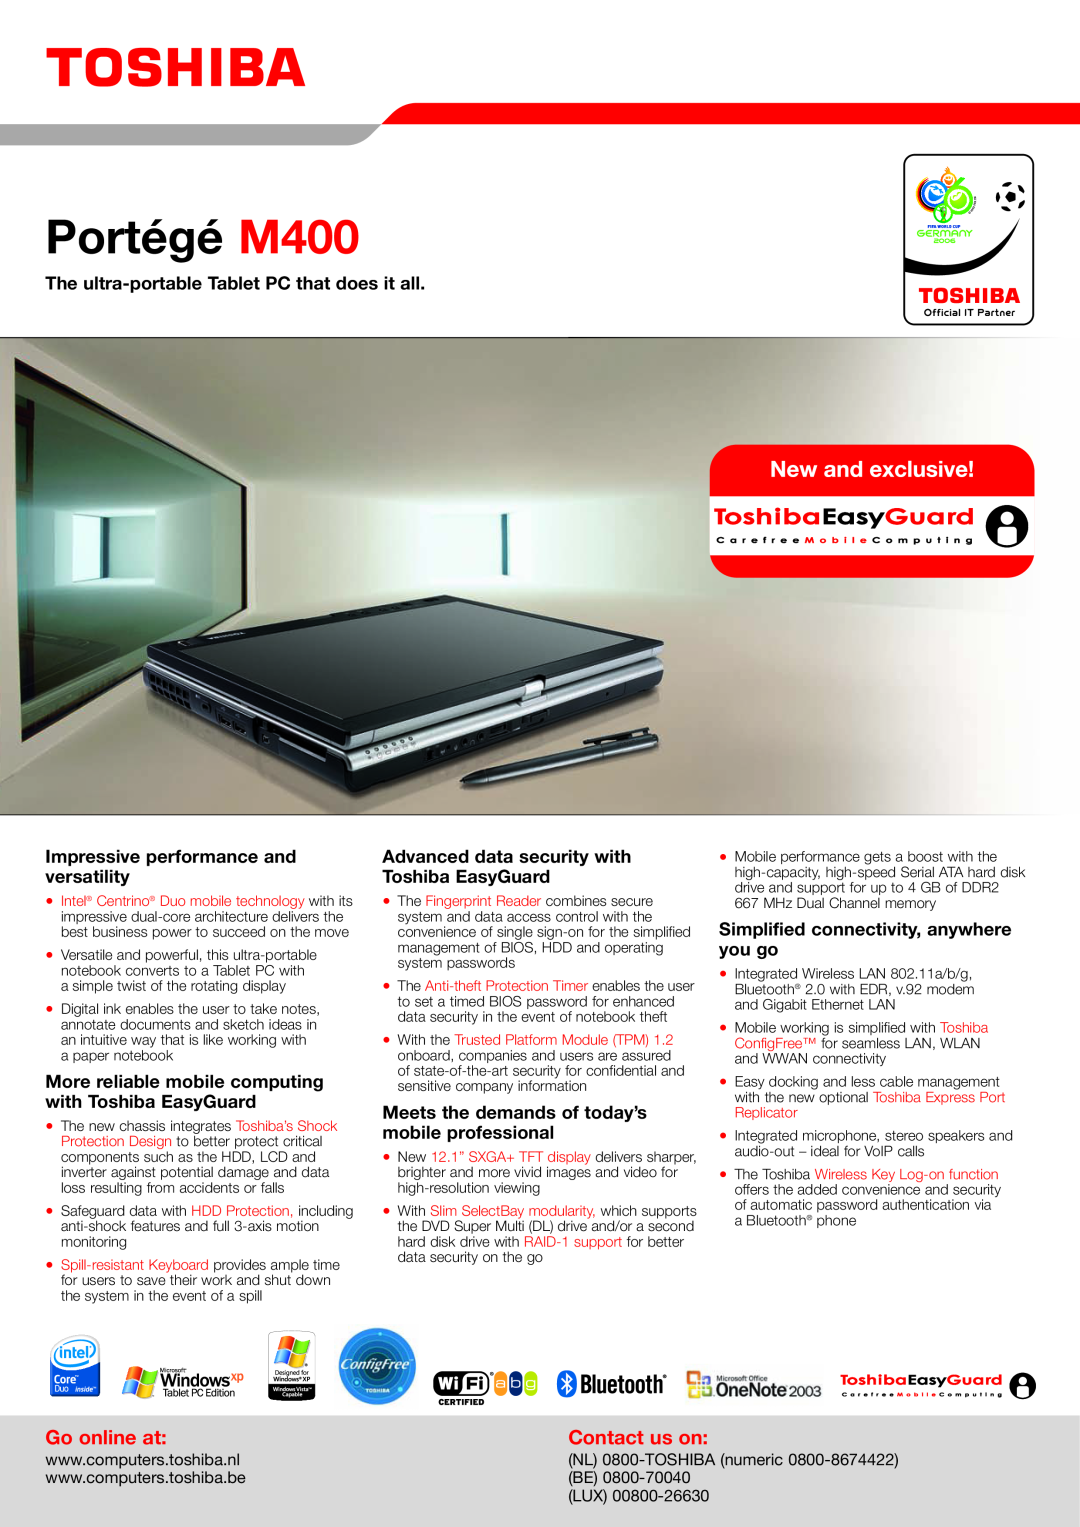 Adaptec manual Go online at, Contact us on, NL 0800-TOSHIBA numeric, Portégé M400 